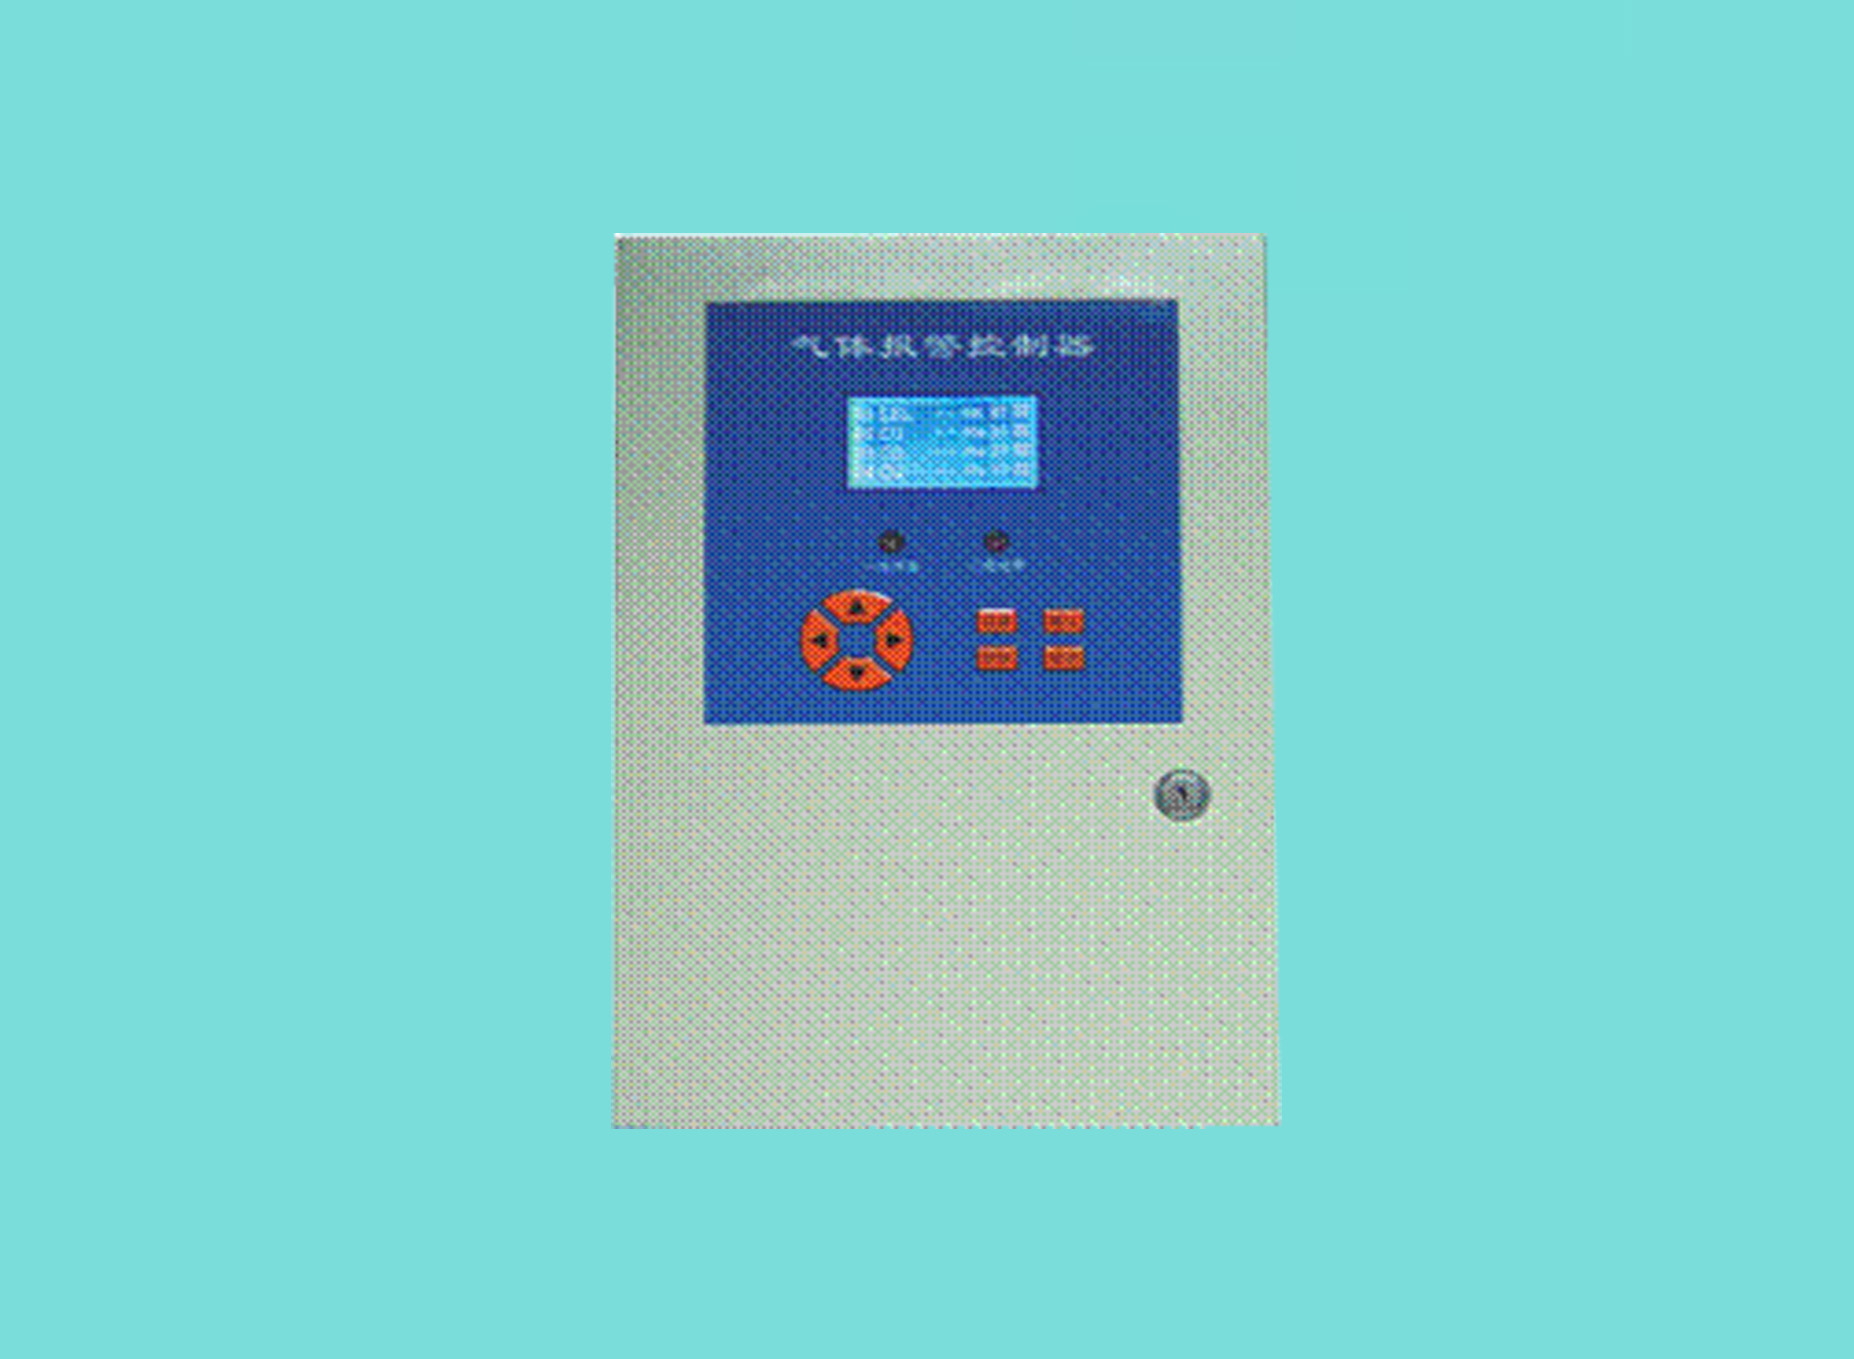 JC-100 type gas alarm controller